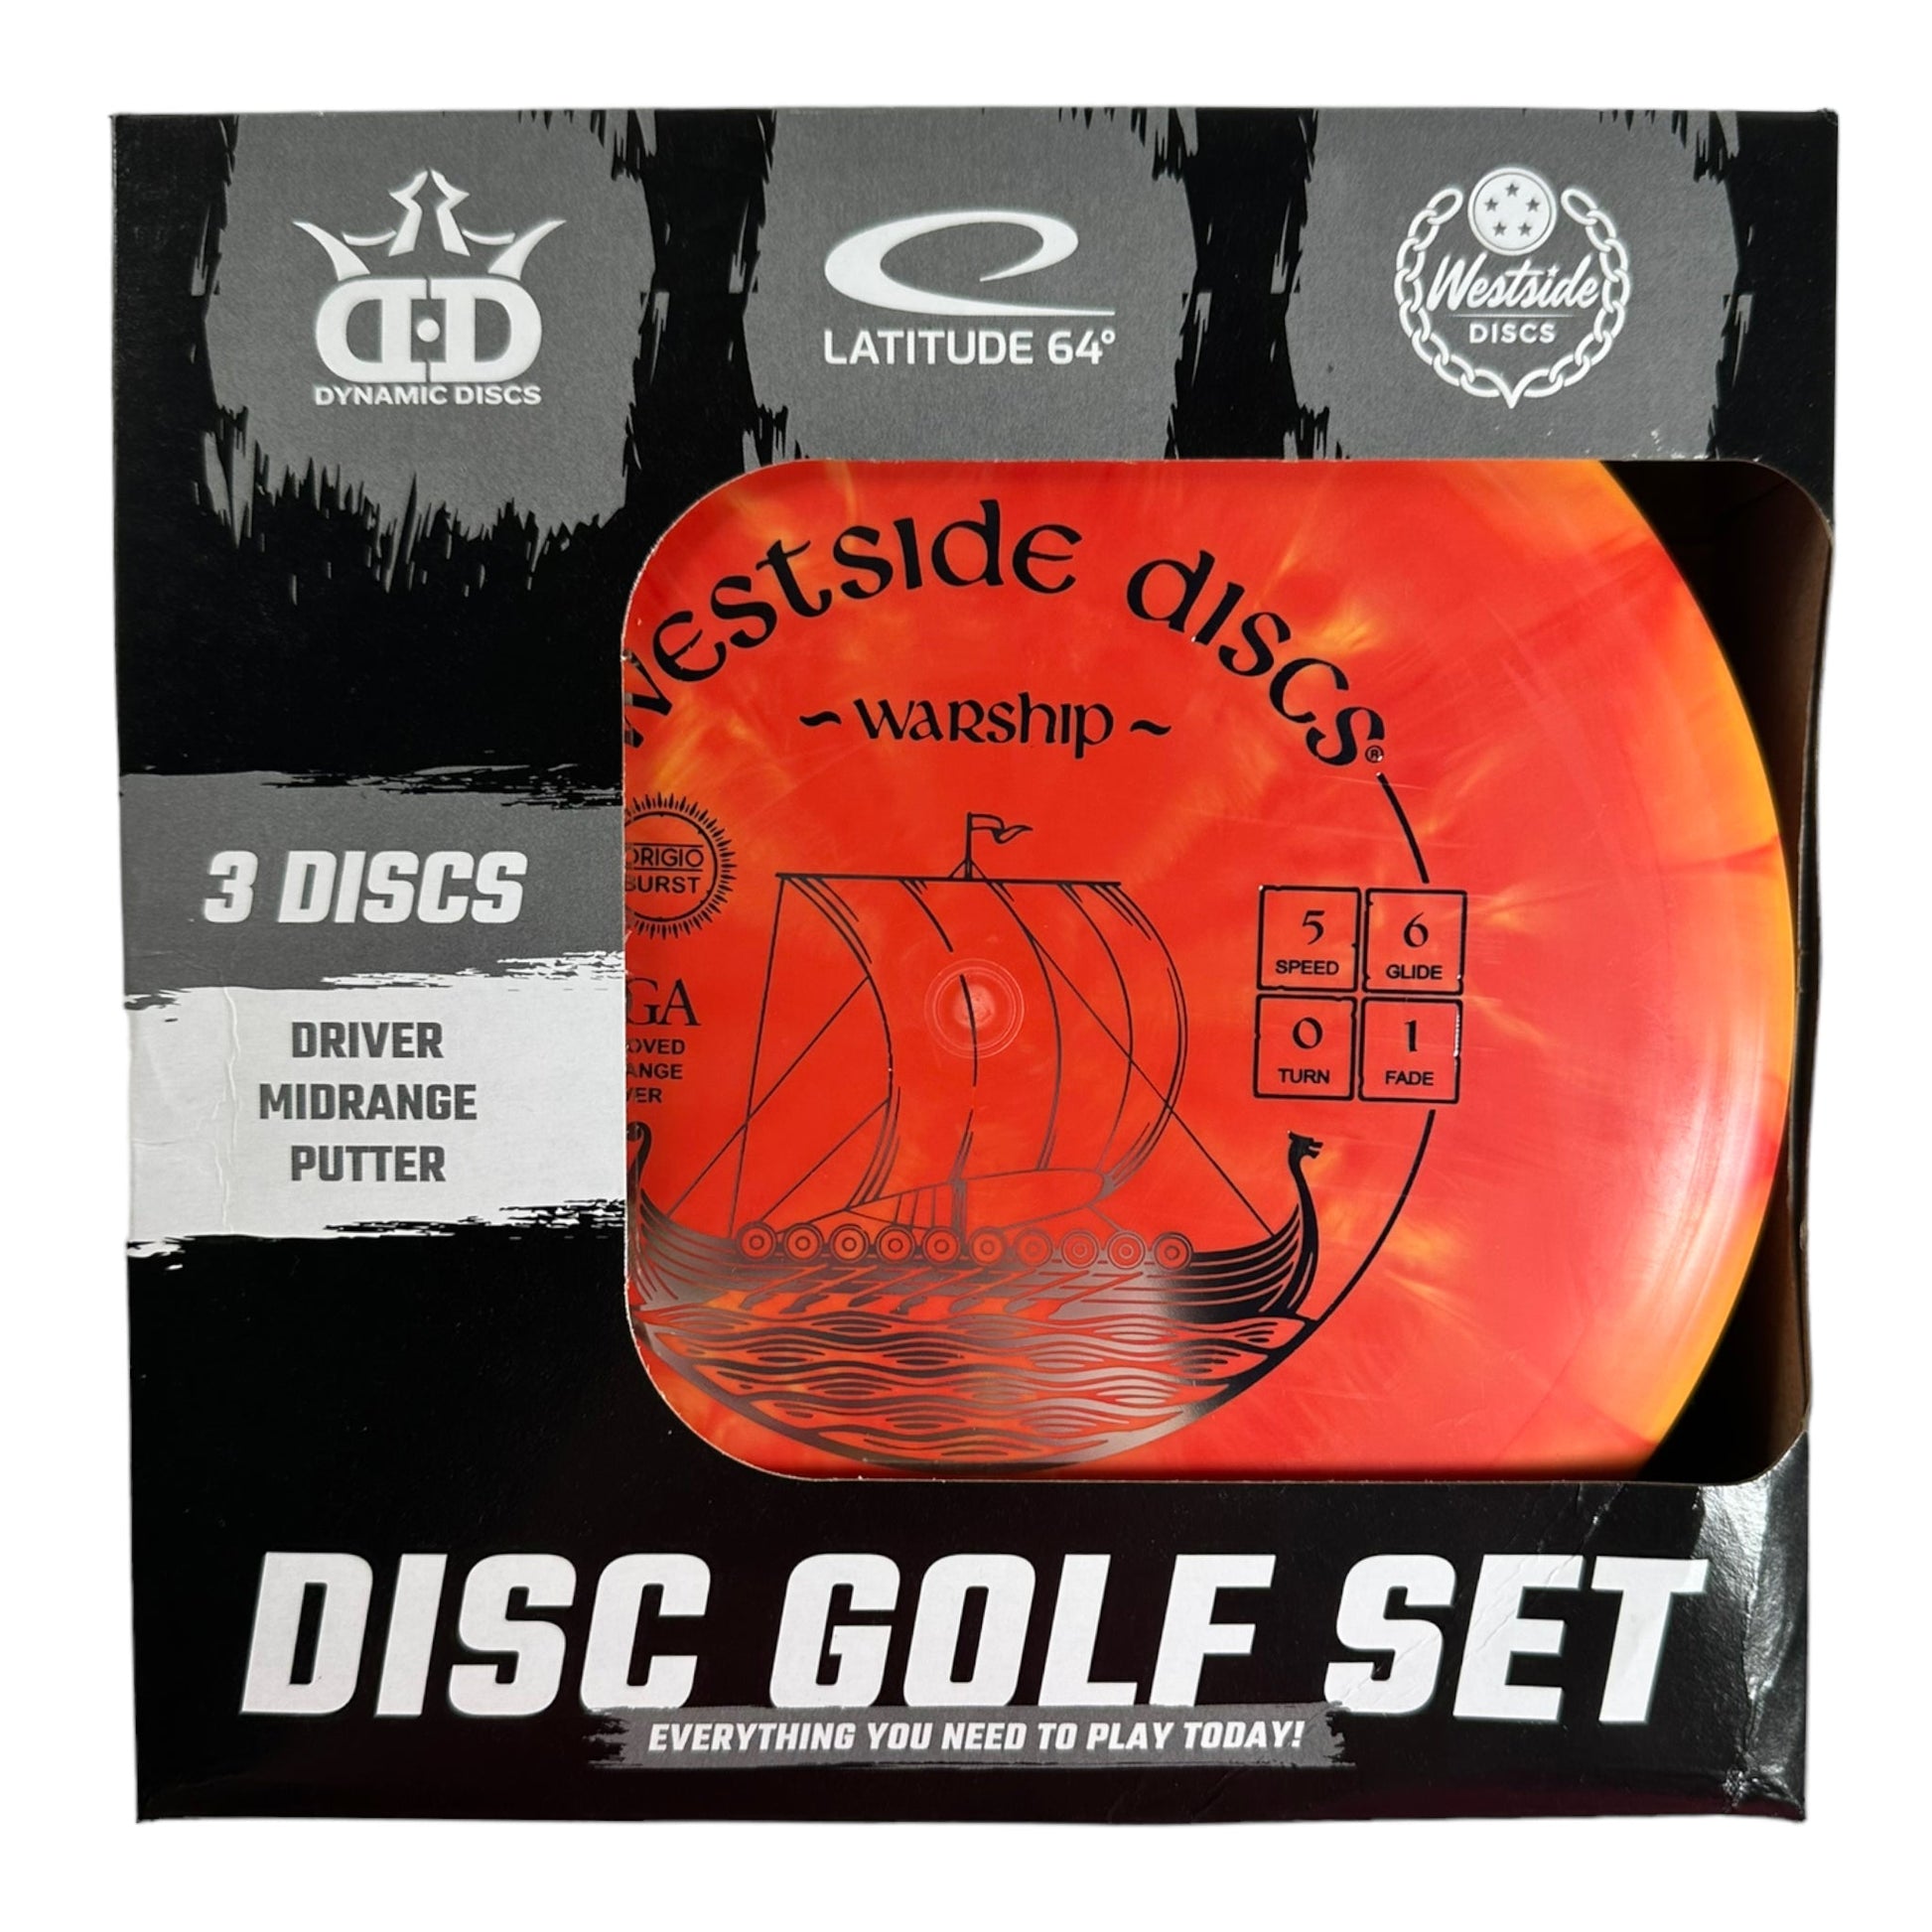 Trilogy Disc Golf Starter Set